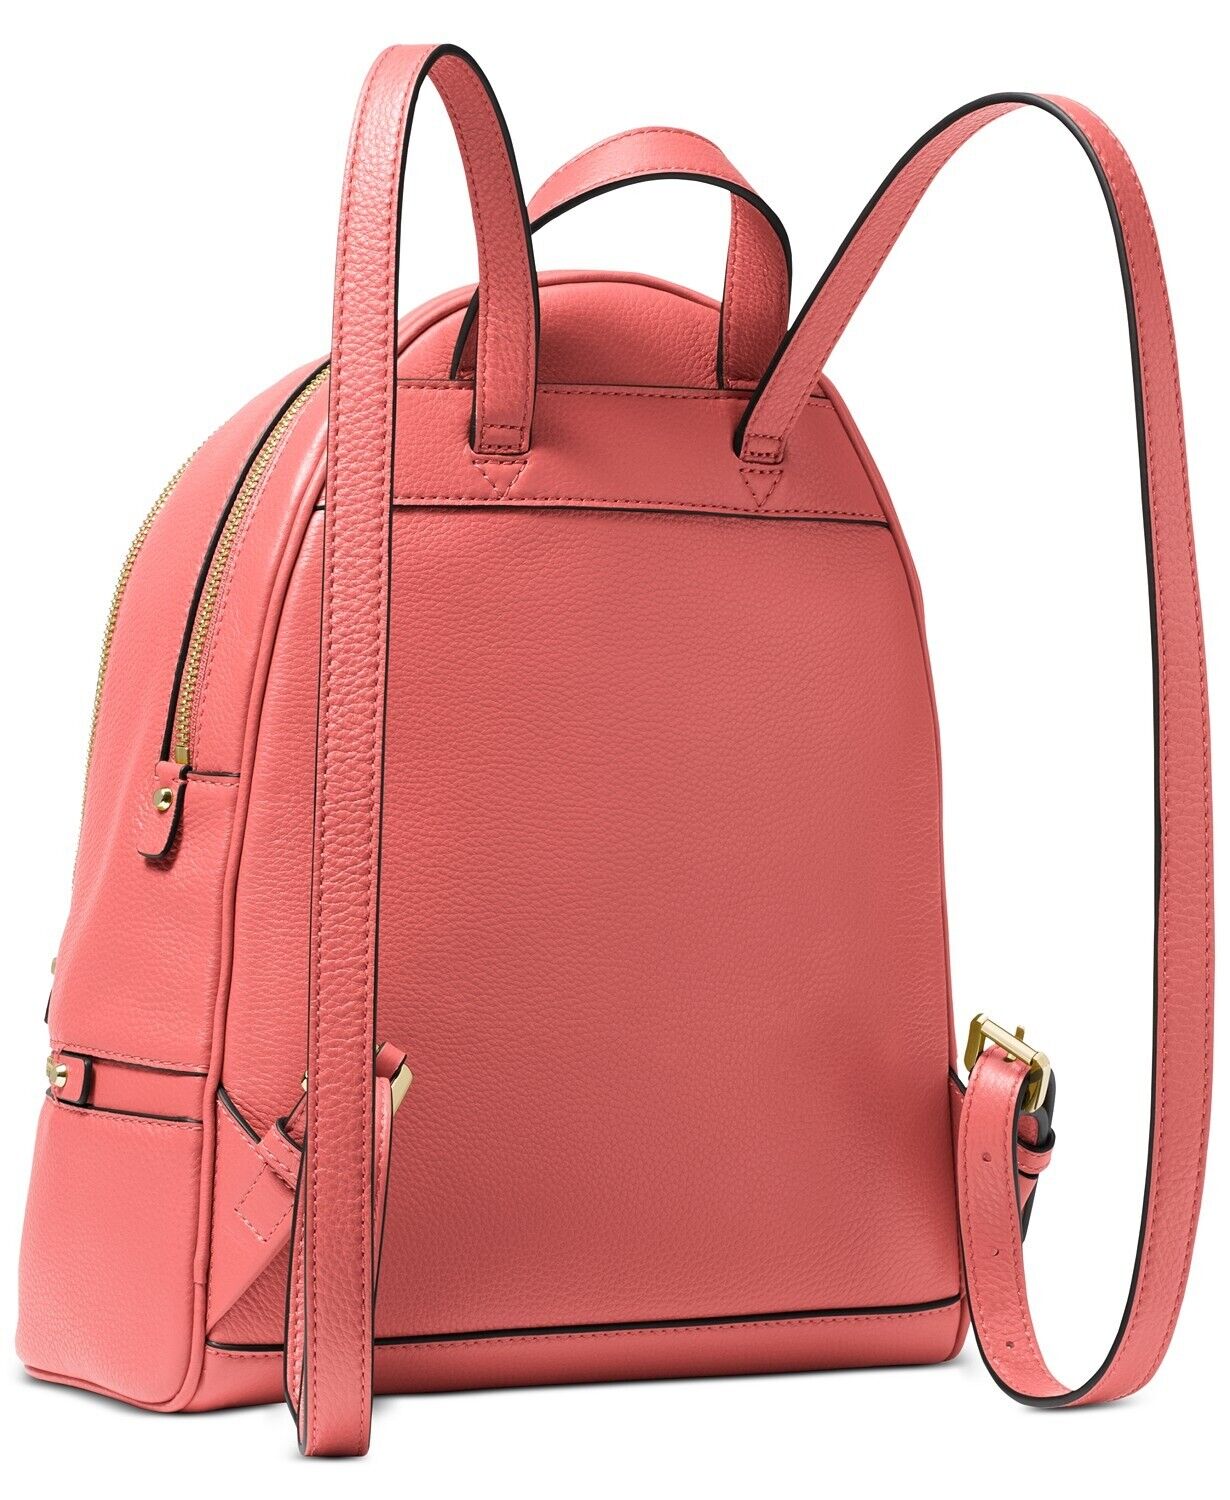 Michael Kors Rhea Zip Medium Pebbled Leather Backpack (Grapefruit)